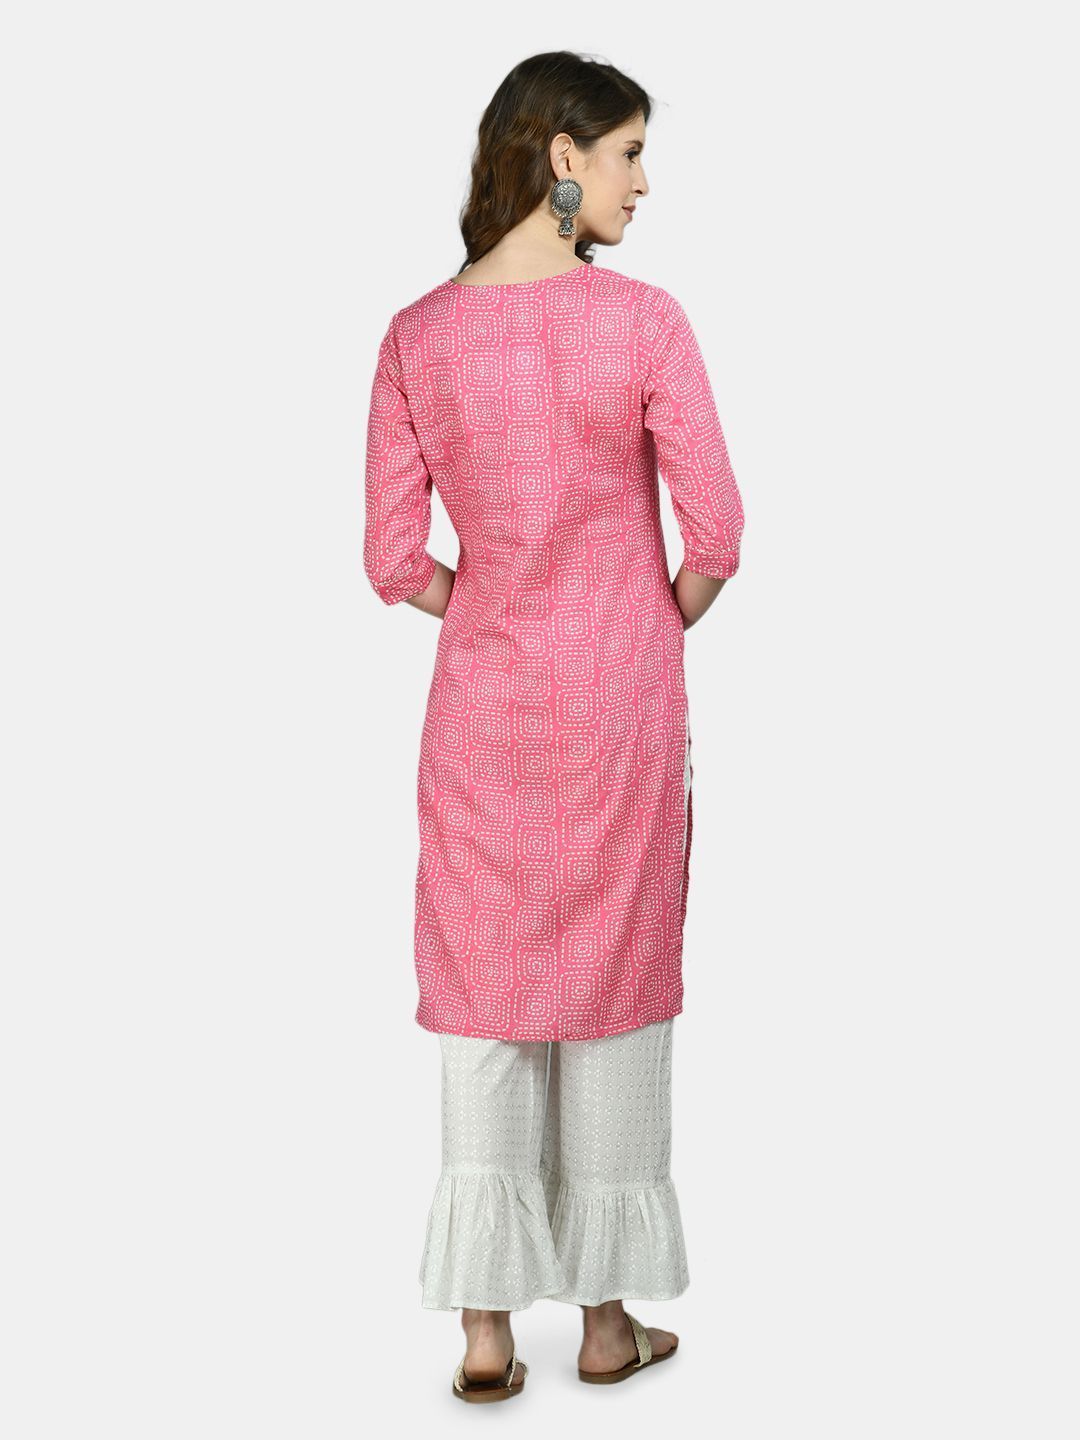 Women's Pink Cotton Printed 3/4 Sleeve Round Neck Casual Kurta Palazzo Set - Myshka